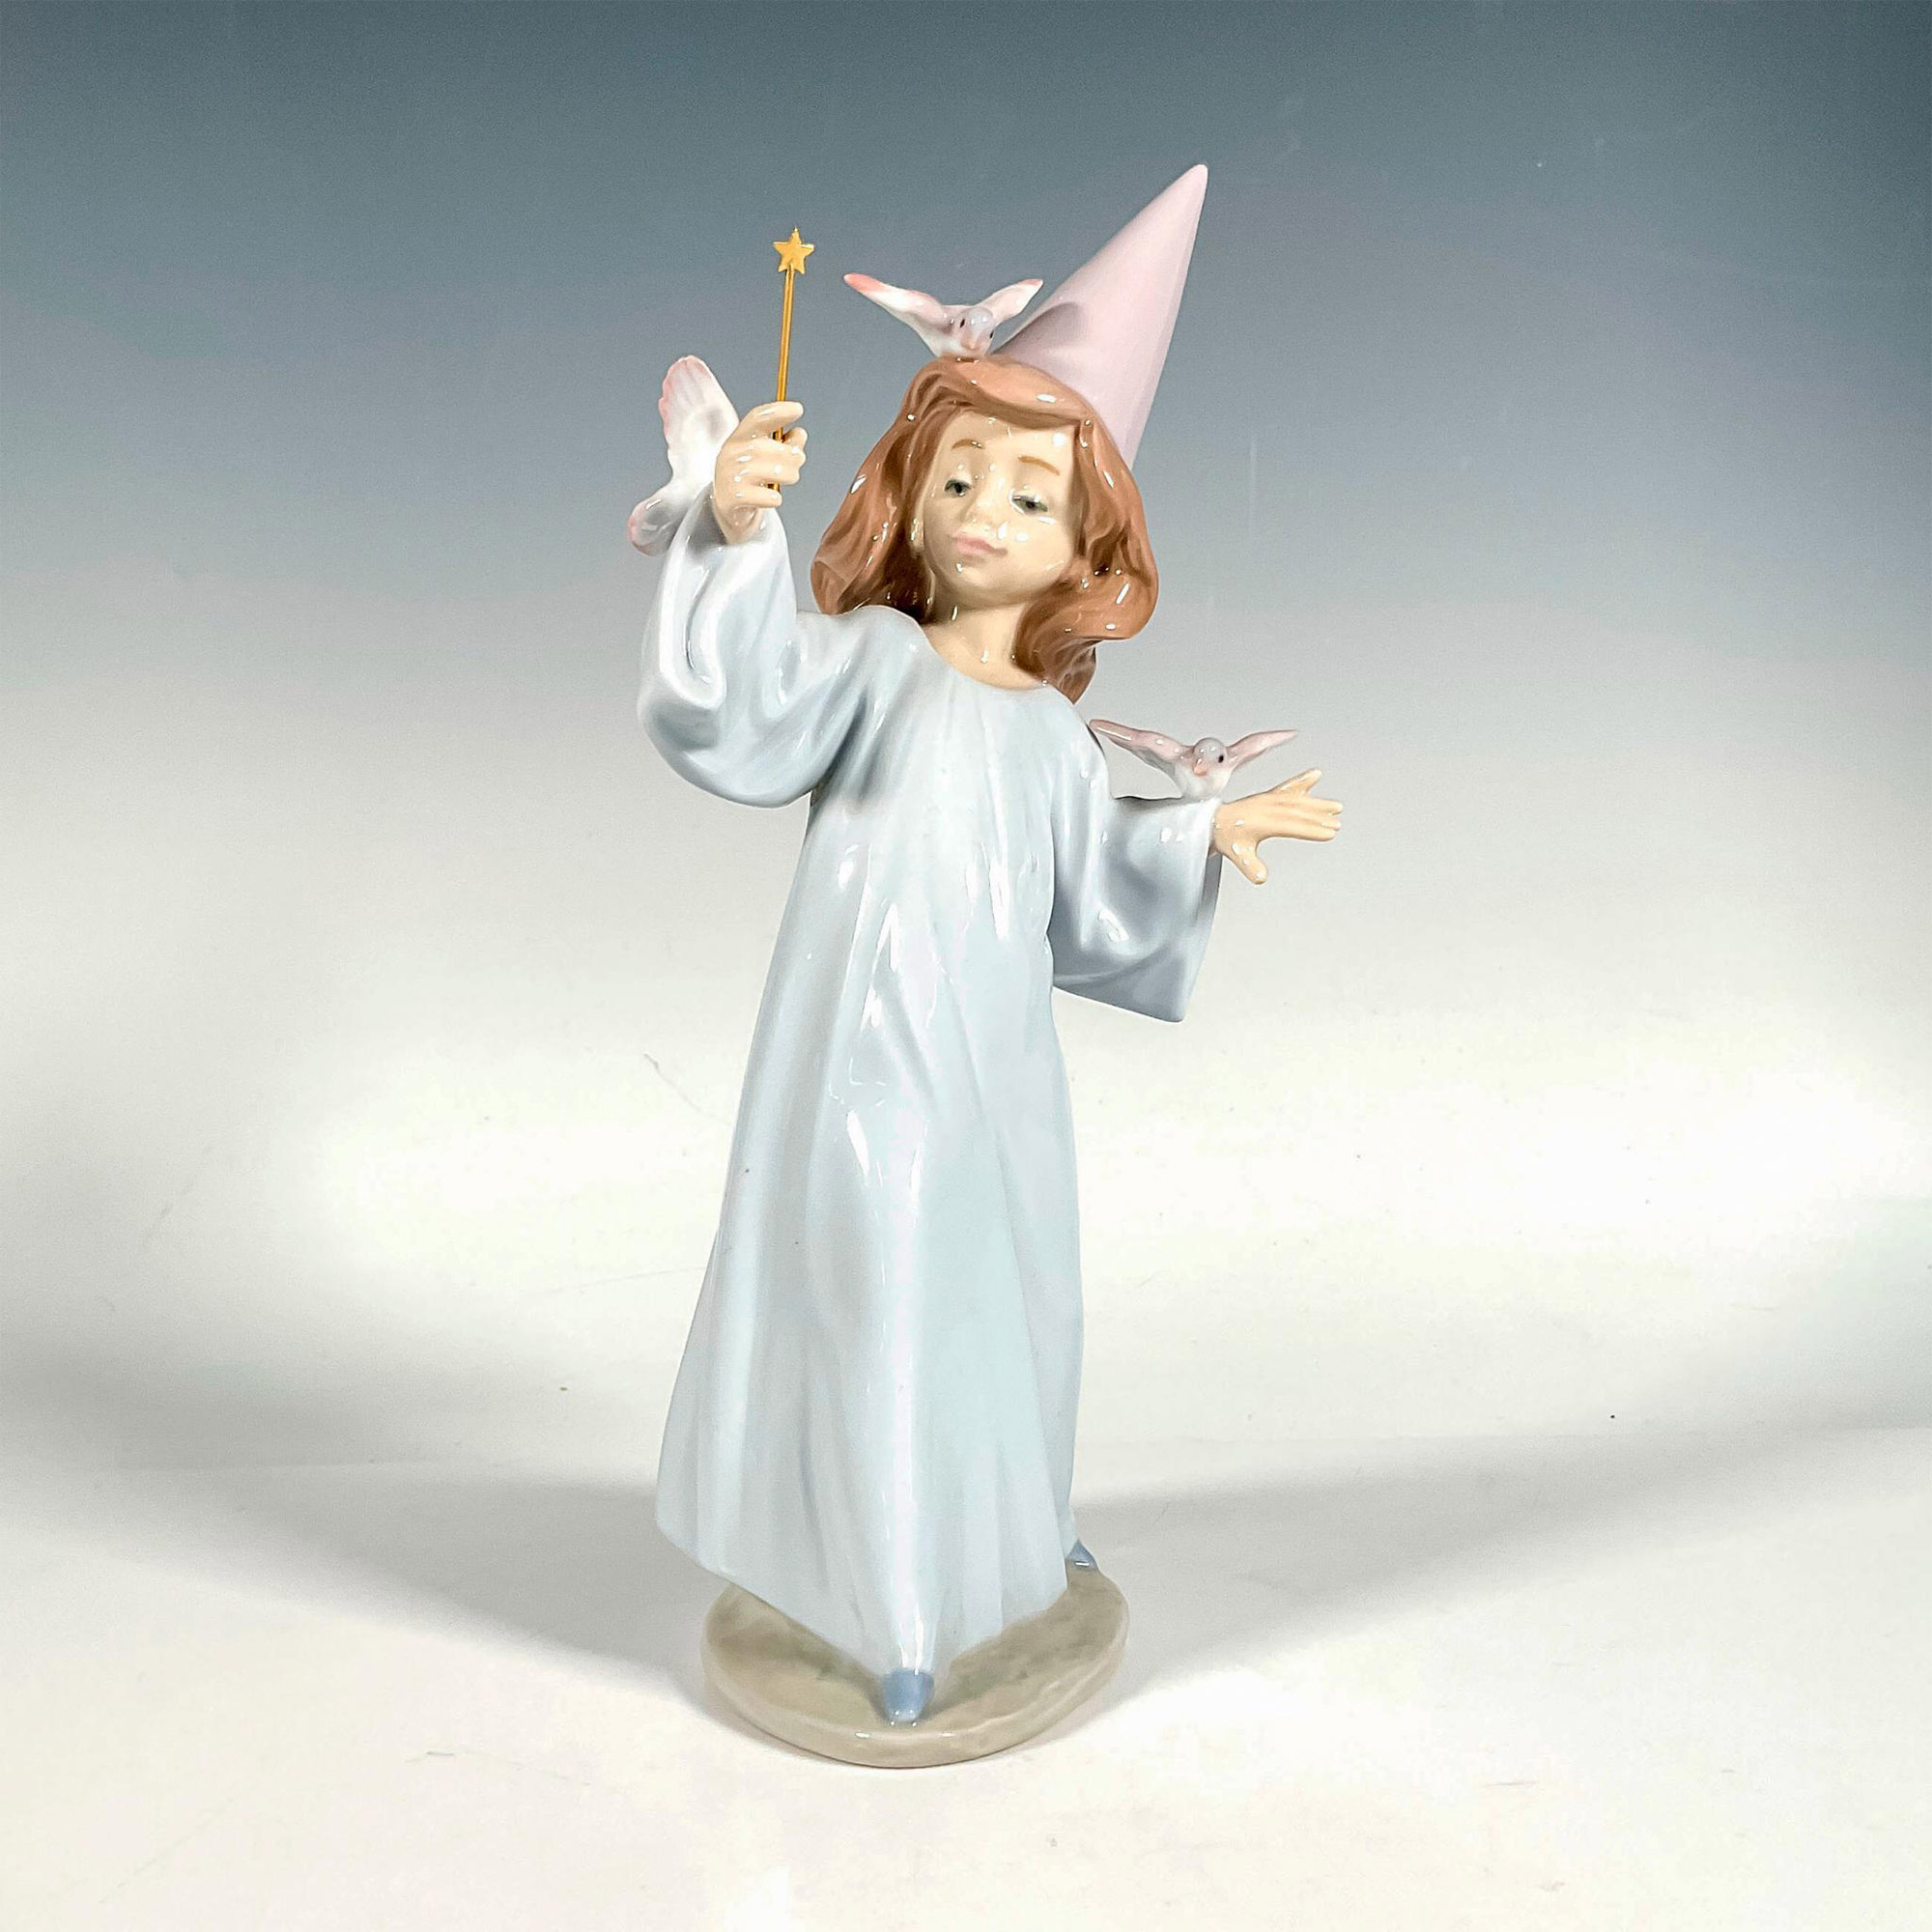 Magical Moment 1006171 - Lladro Porcelain Figurine